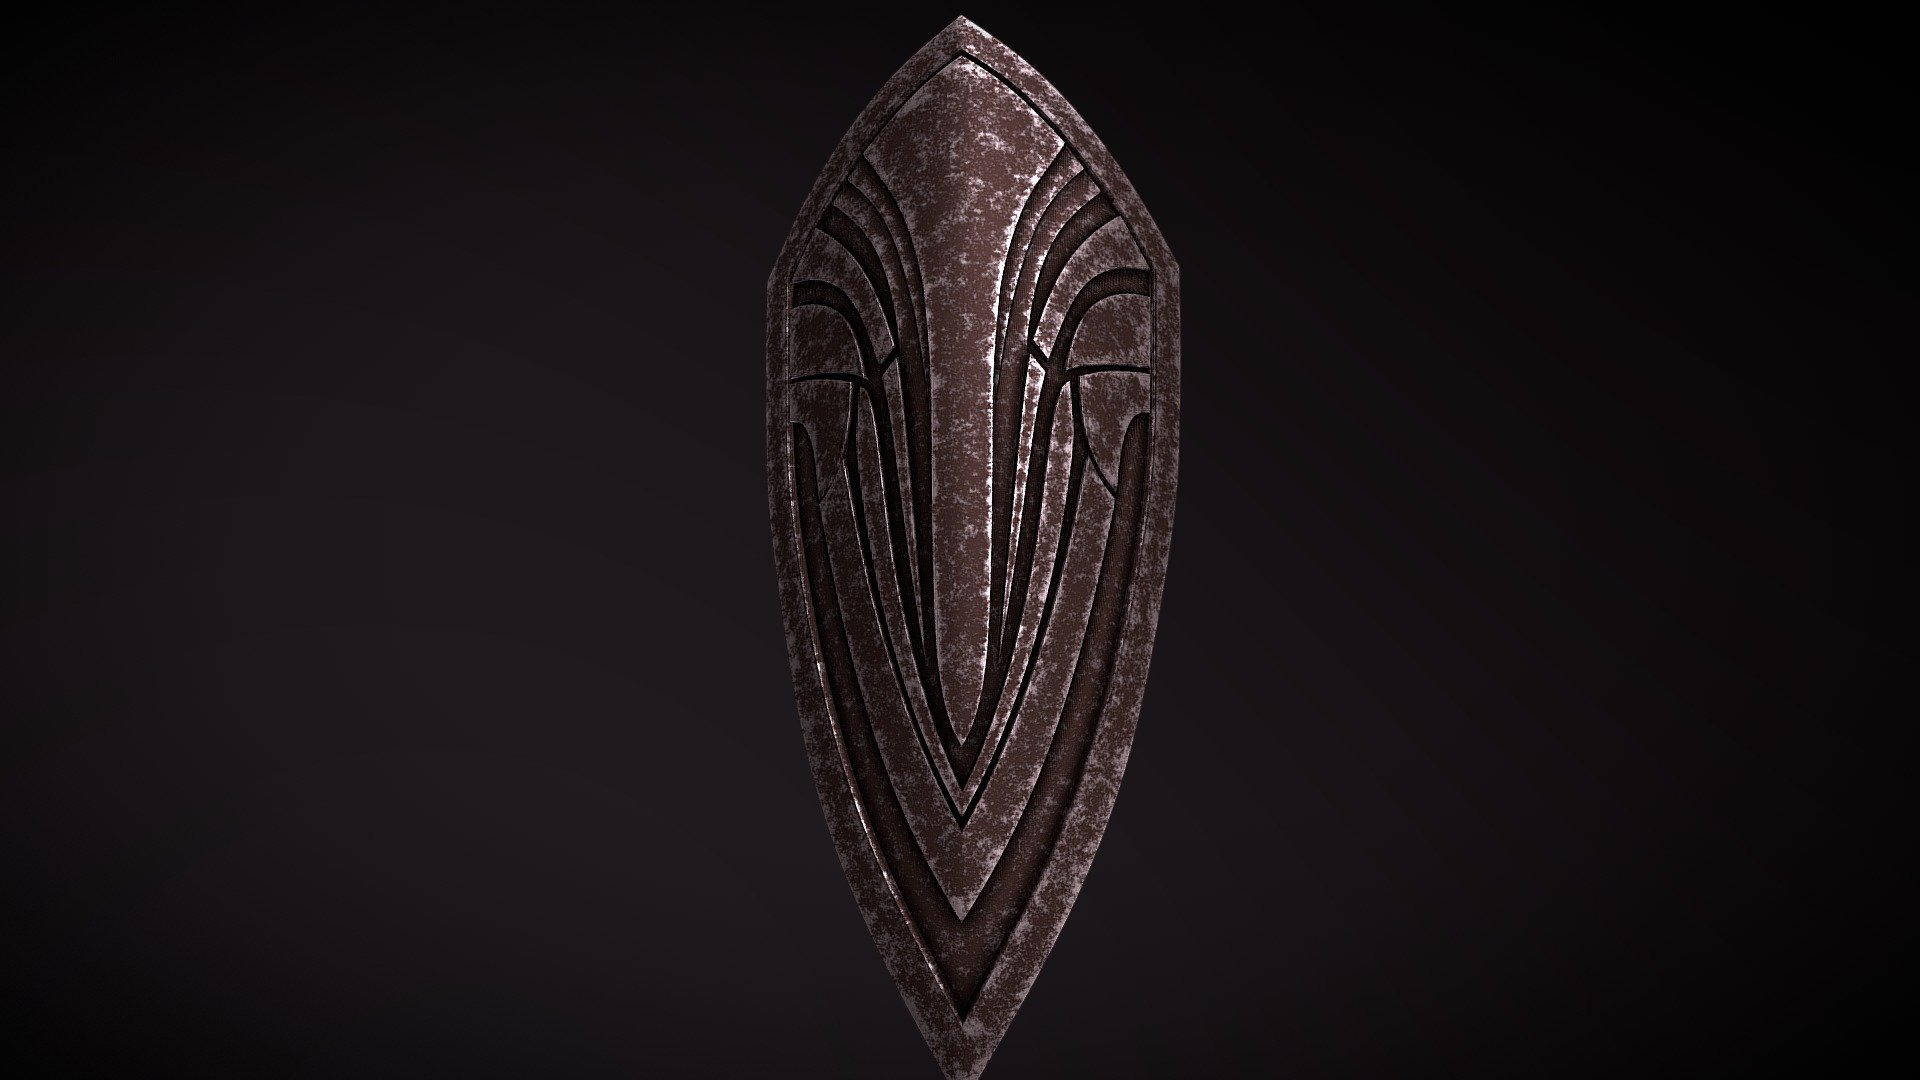 Black Knight Shield